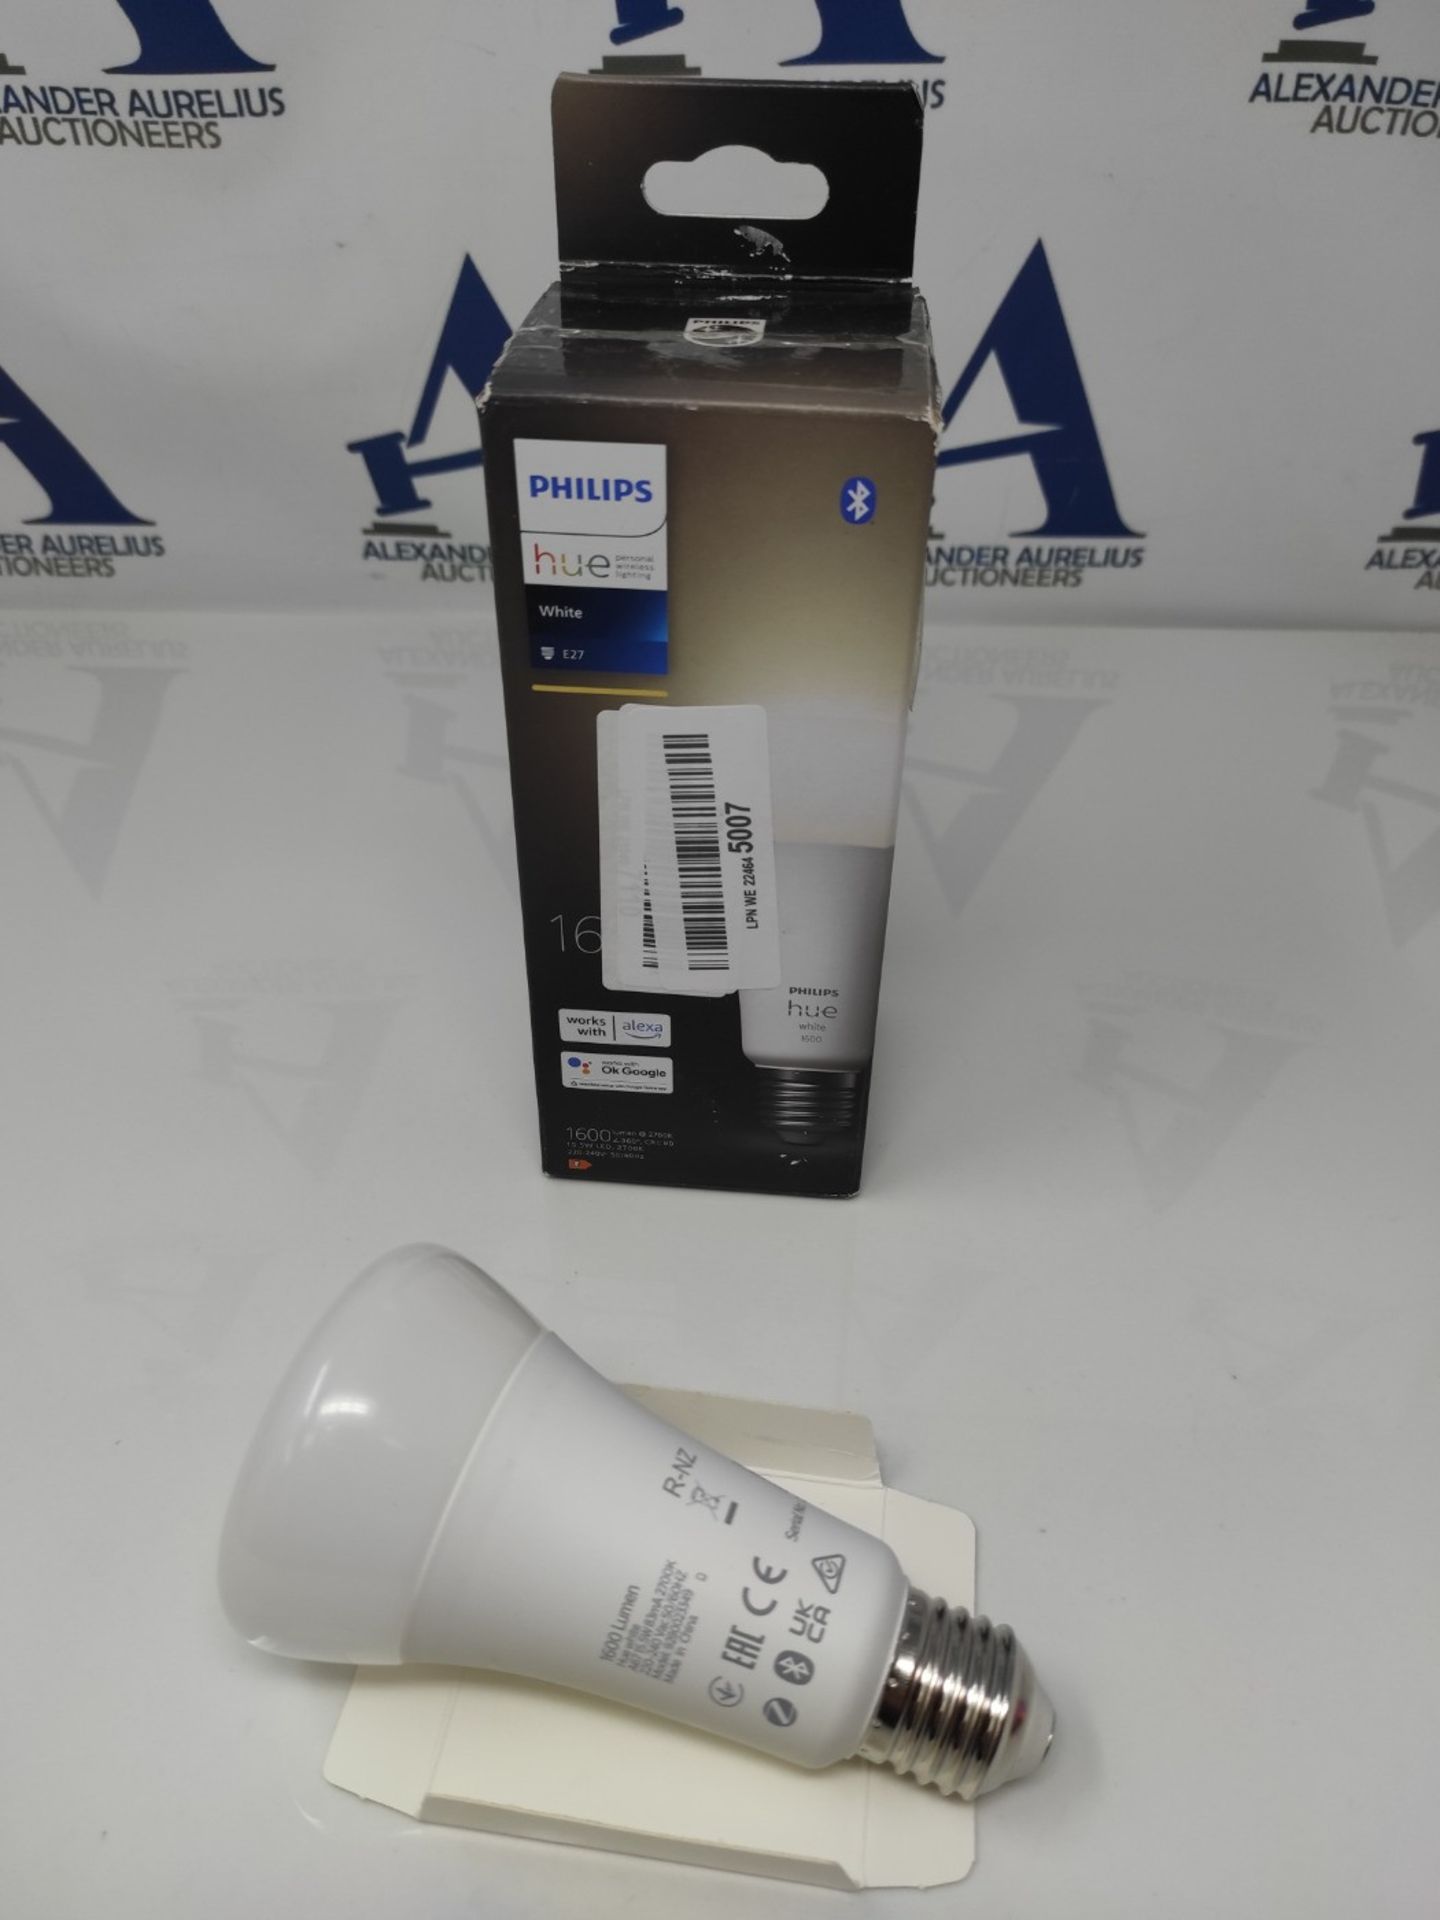 Philips Hue NEW White Smart Light Bulb 100W - 1600 Lumen [E27 Edison Screw] With Bluet - Image 2 of 2